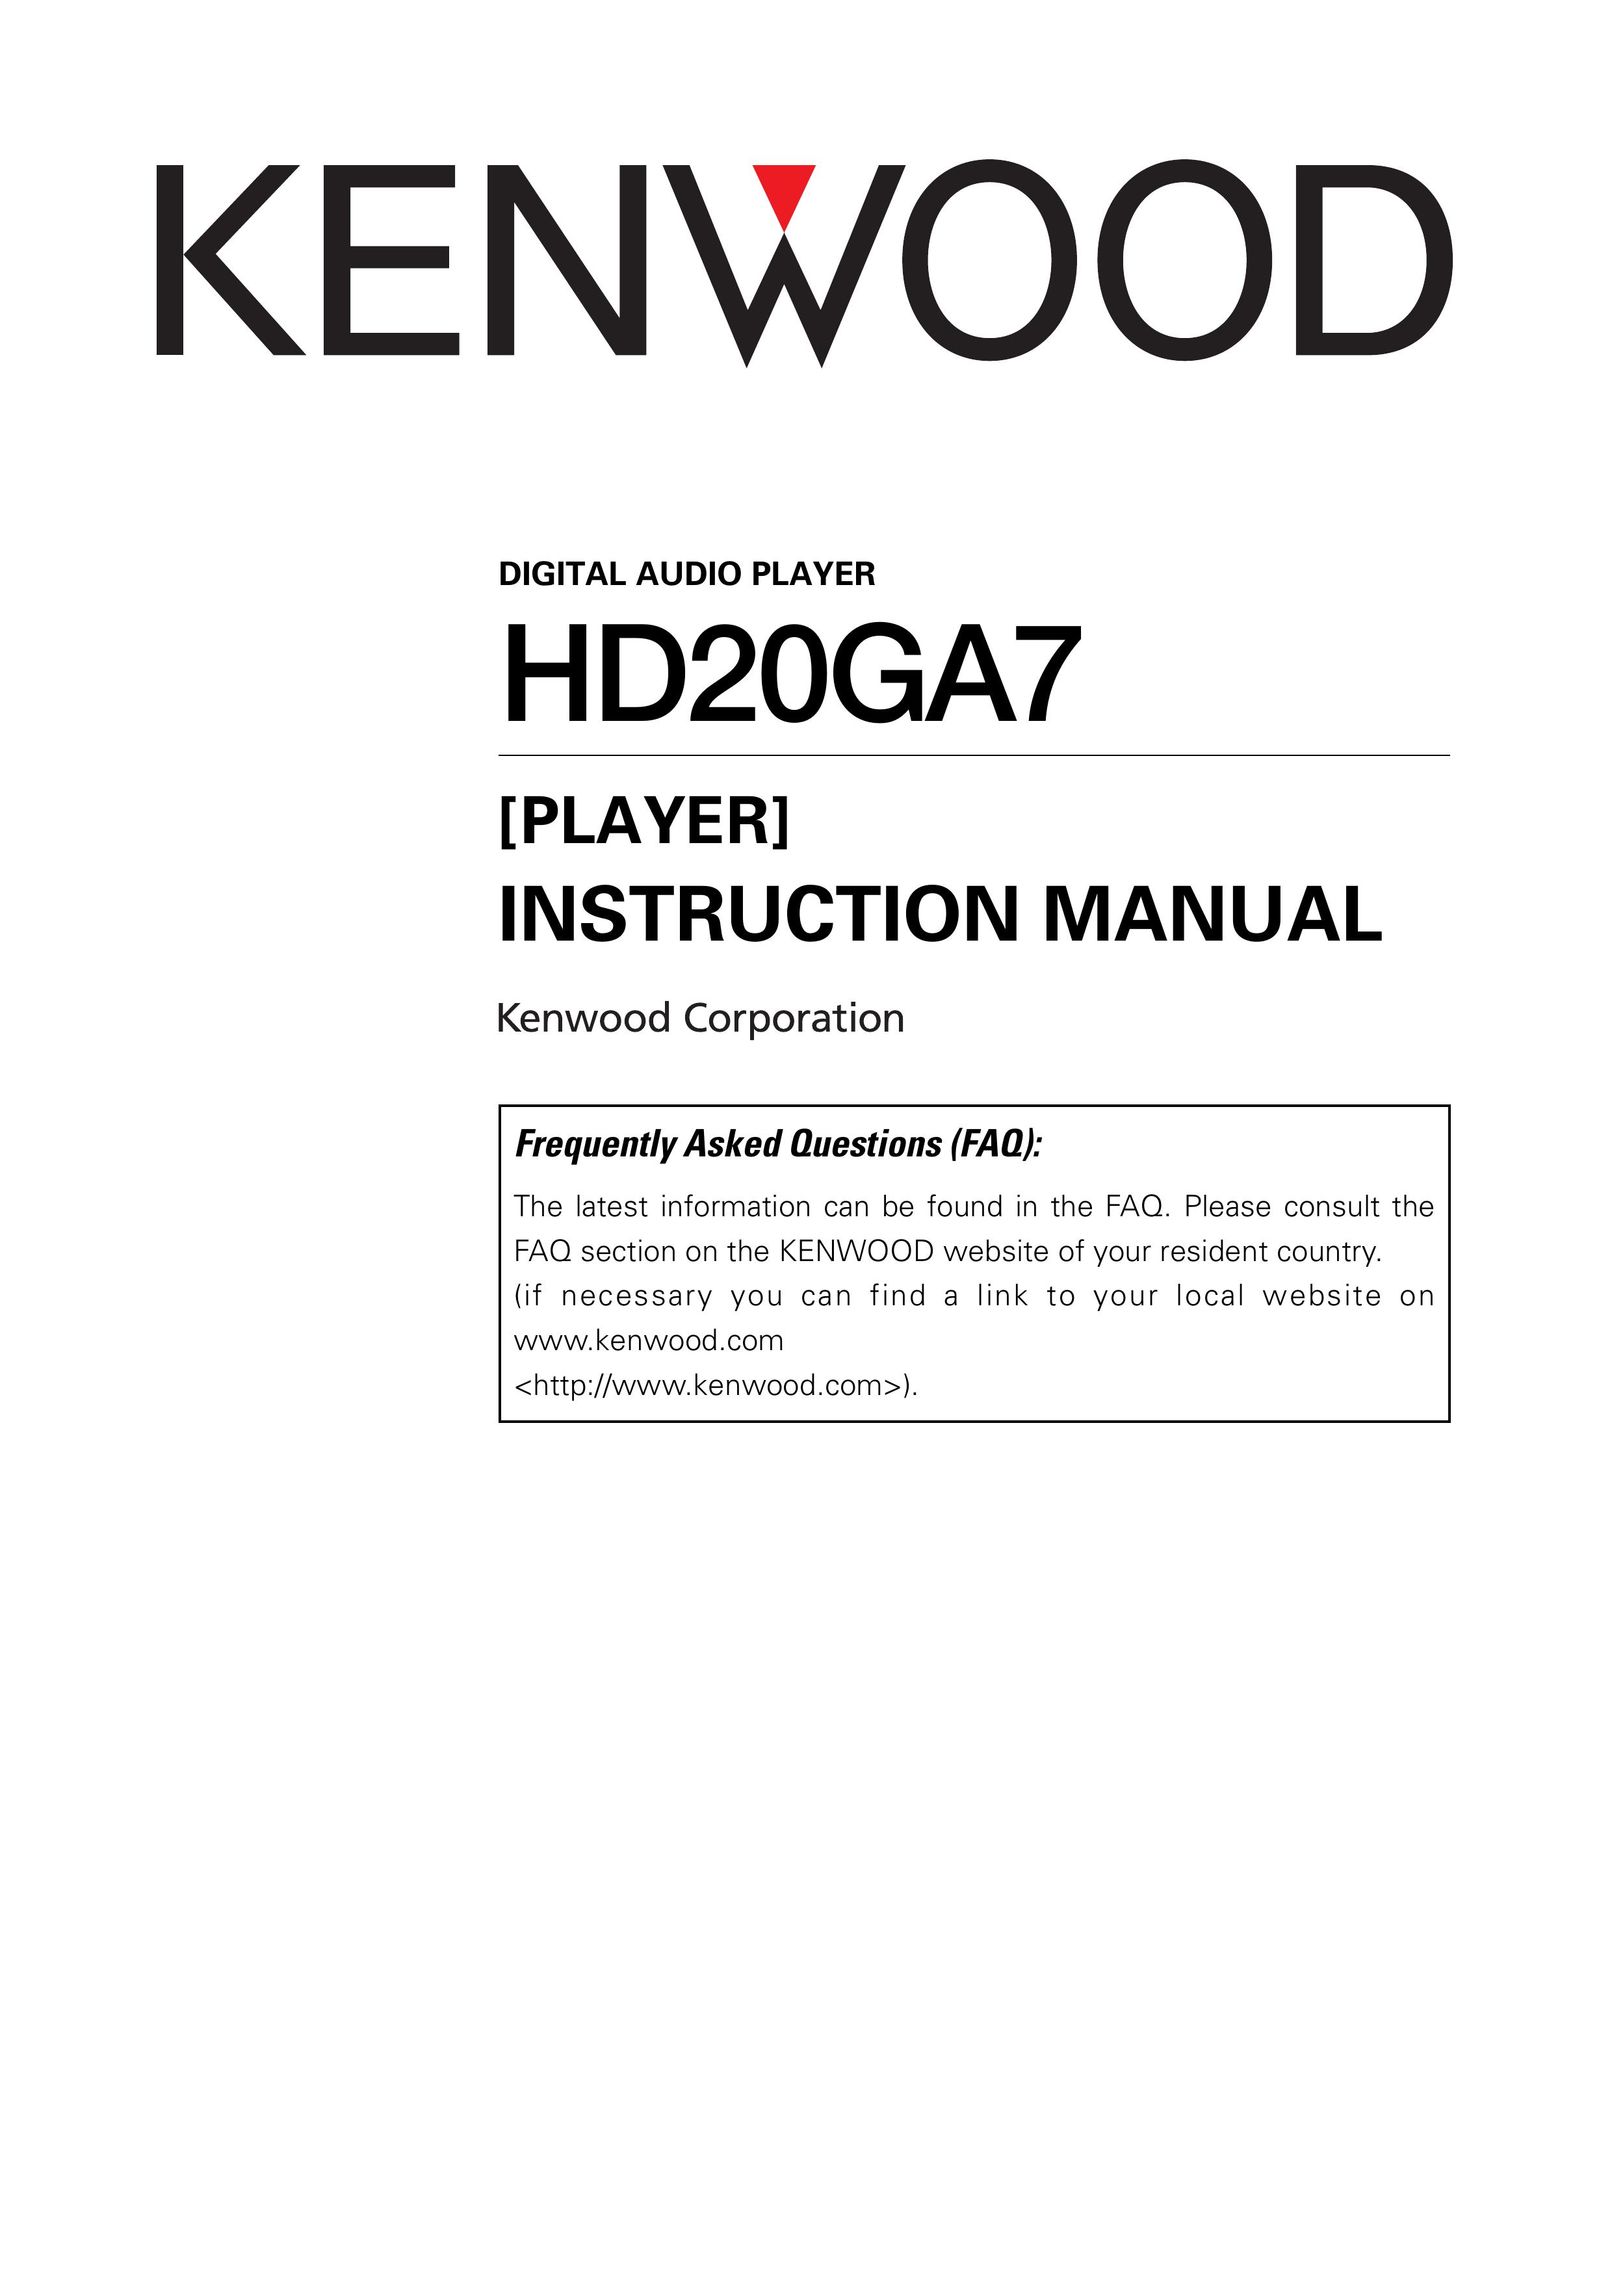 Kenwood HD20GA7 MP3 Player User Manual